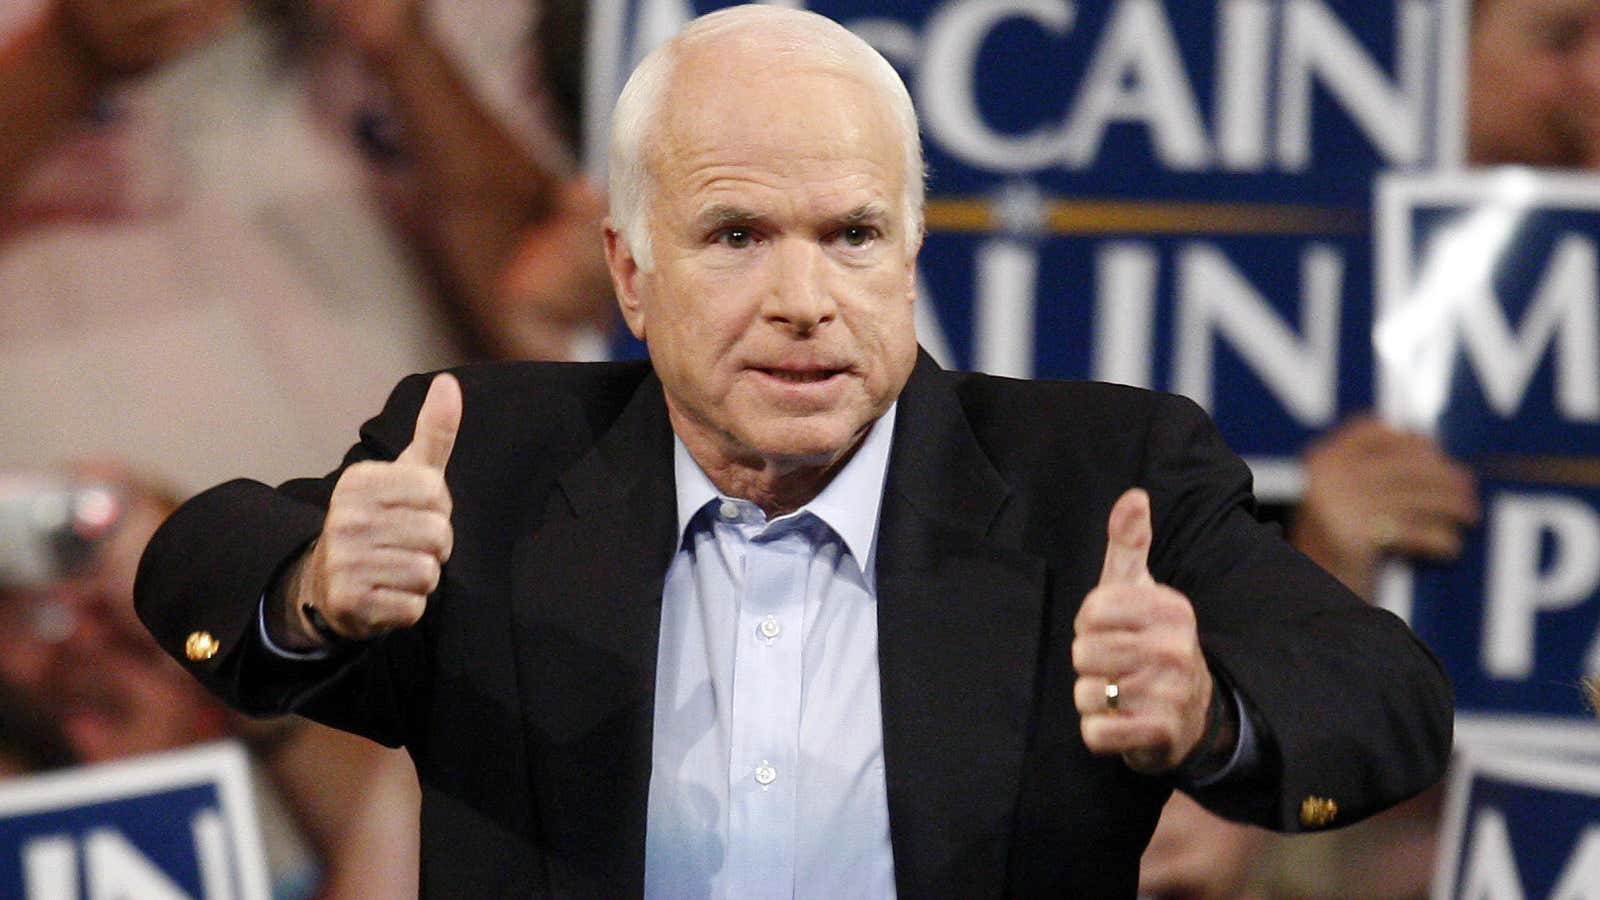 John McCain is in high spirits despite his medical diagnosis